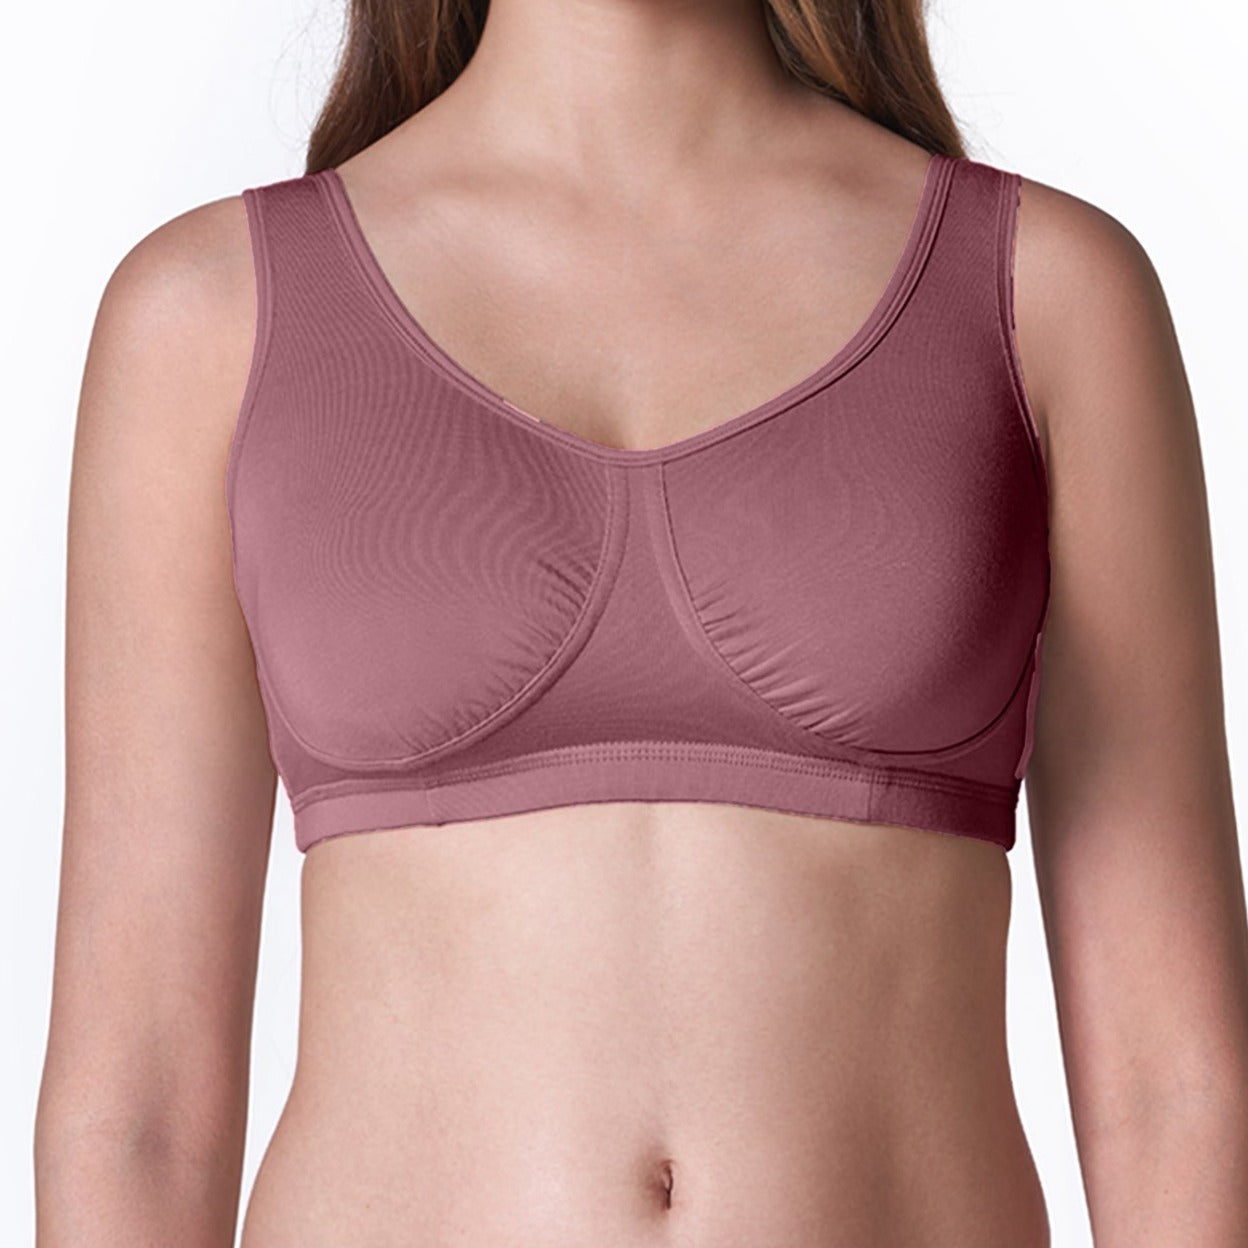 blossom-night bra-rose gold1-Slip-On-utility based bra